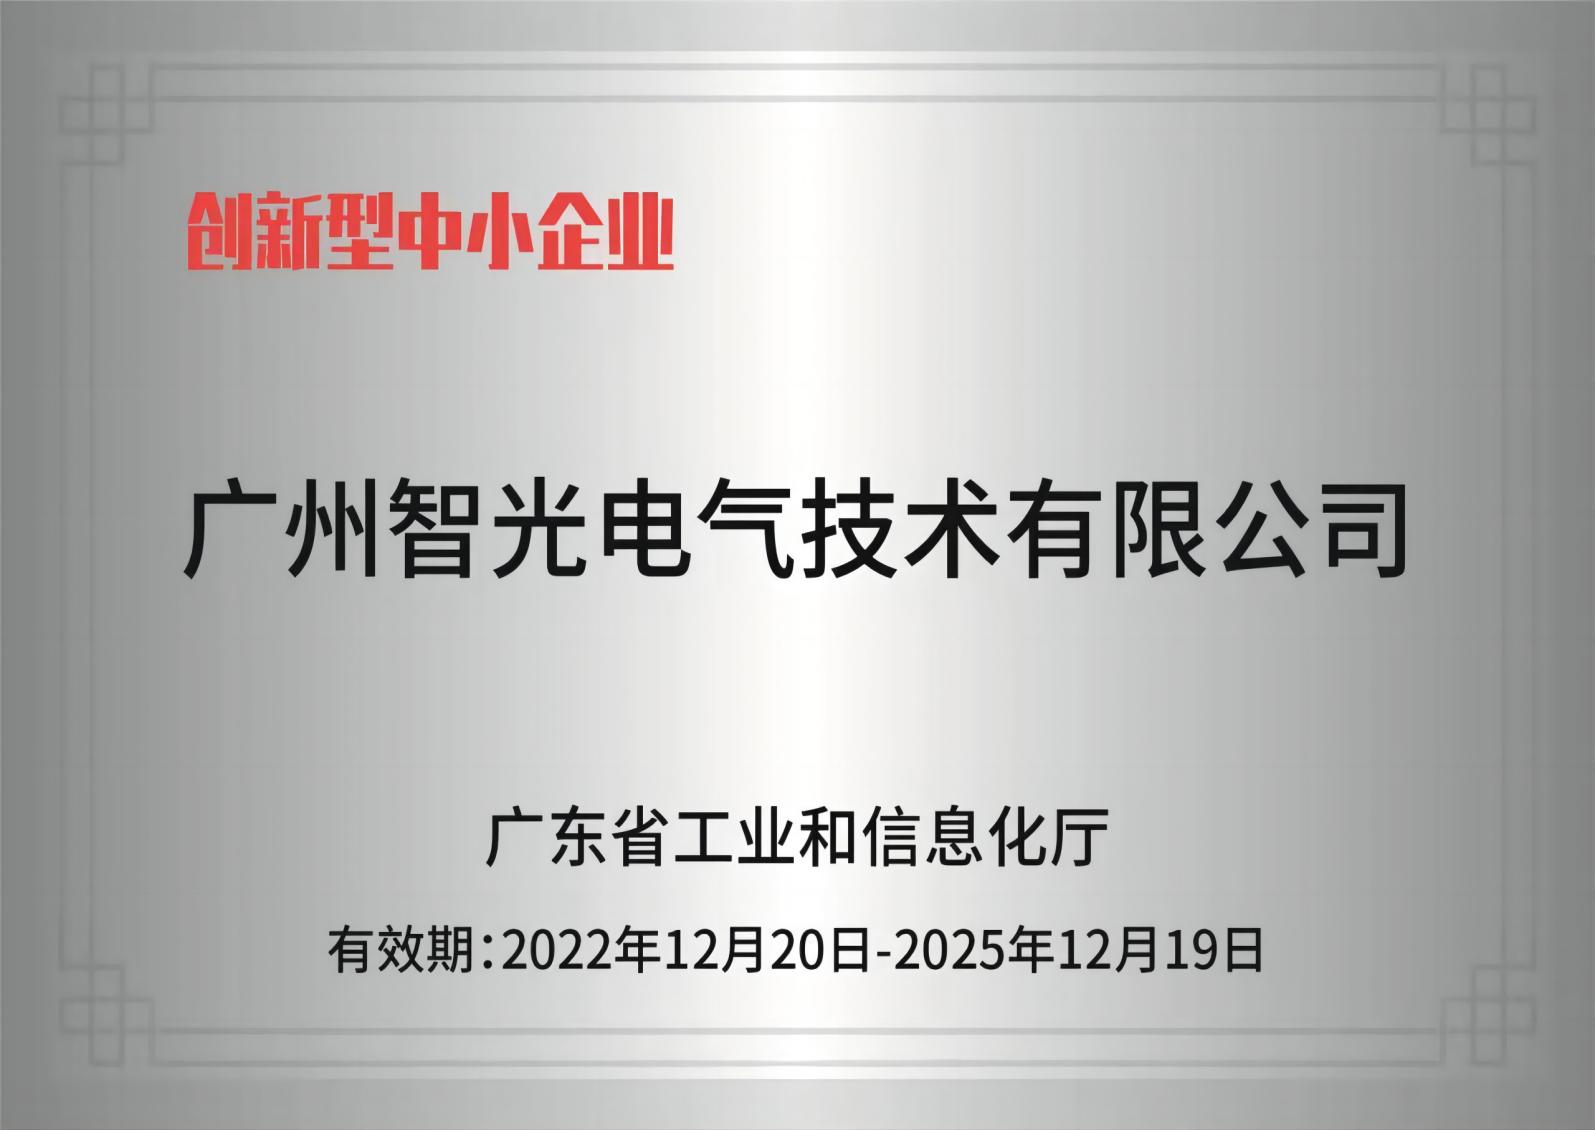 Zhiguang Electric Technology——Innovative SMEs